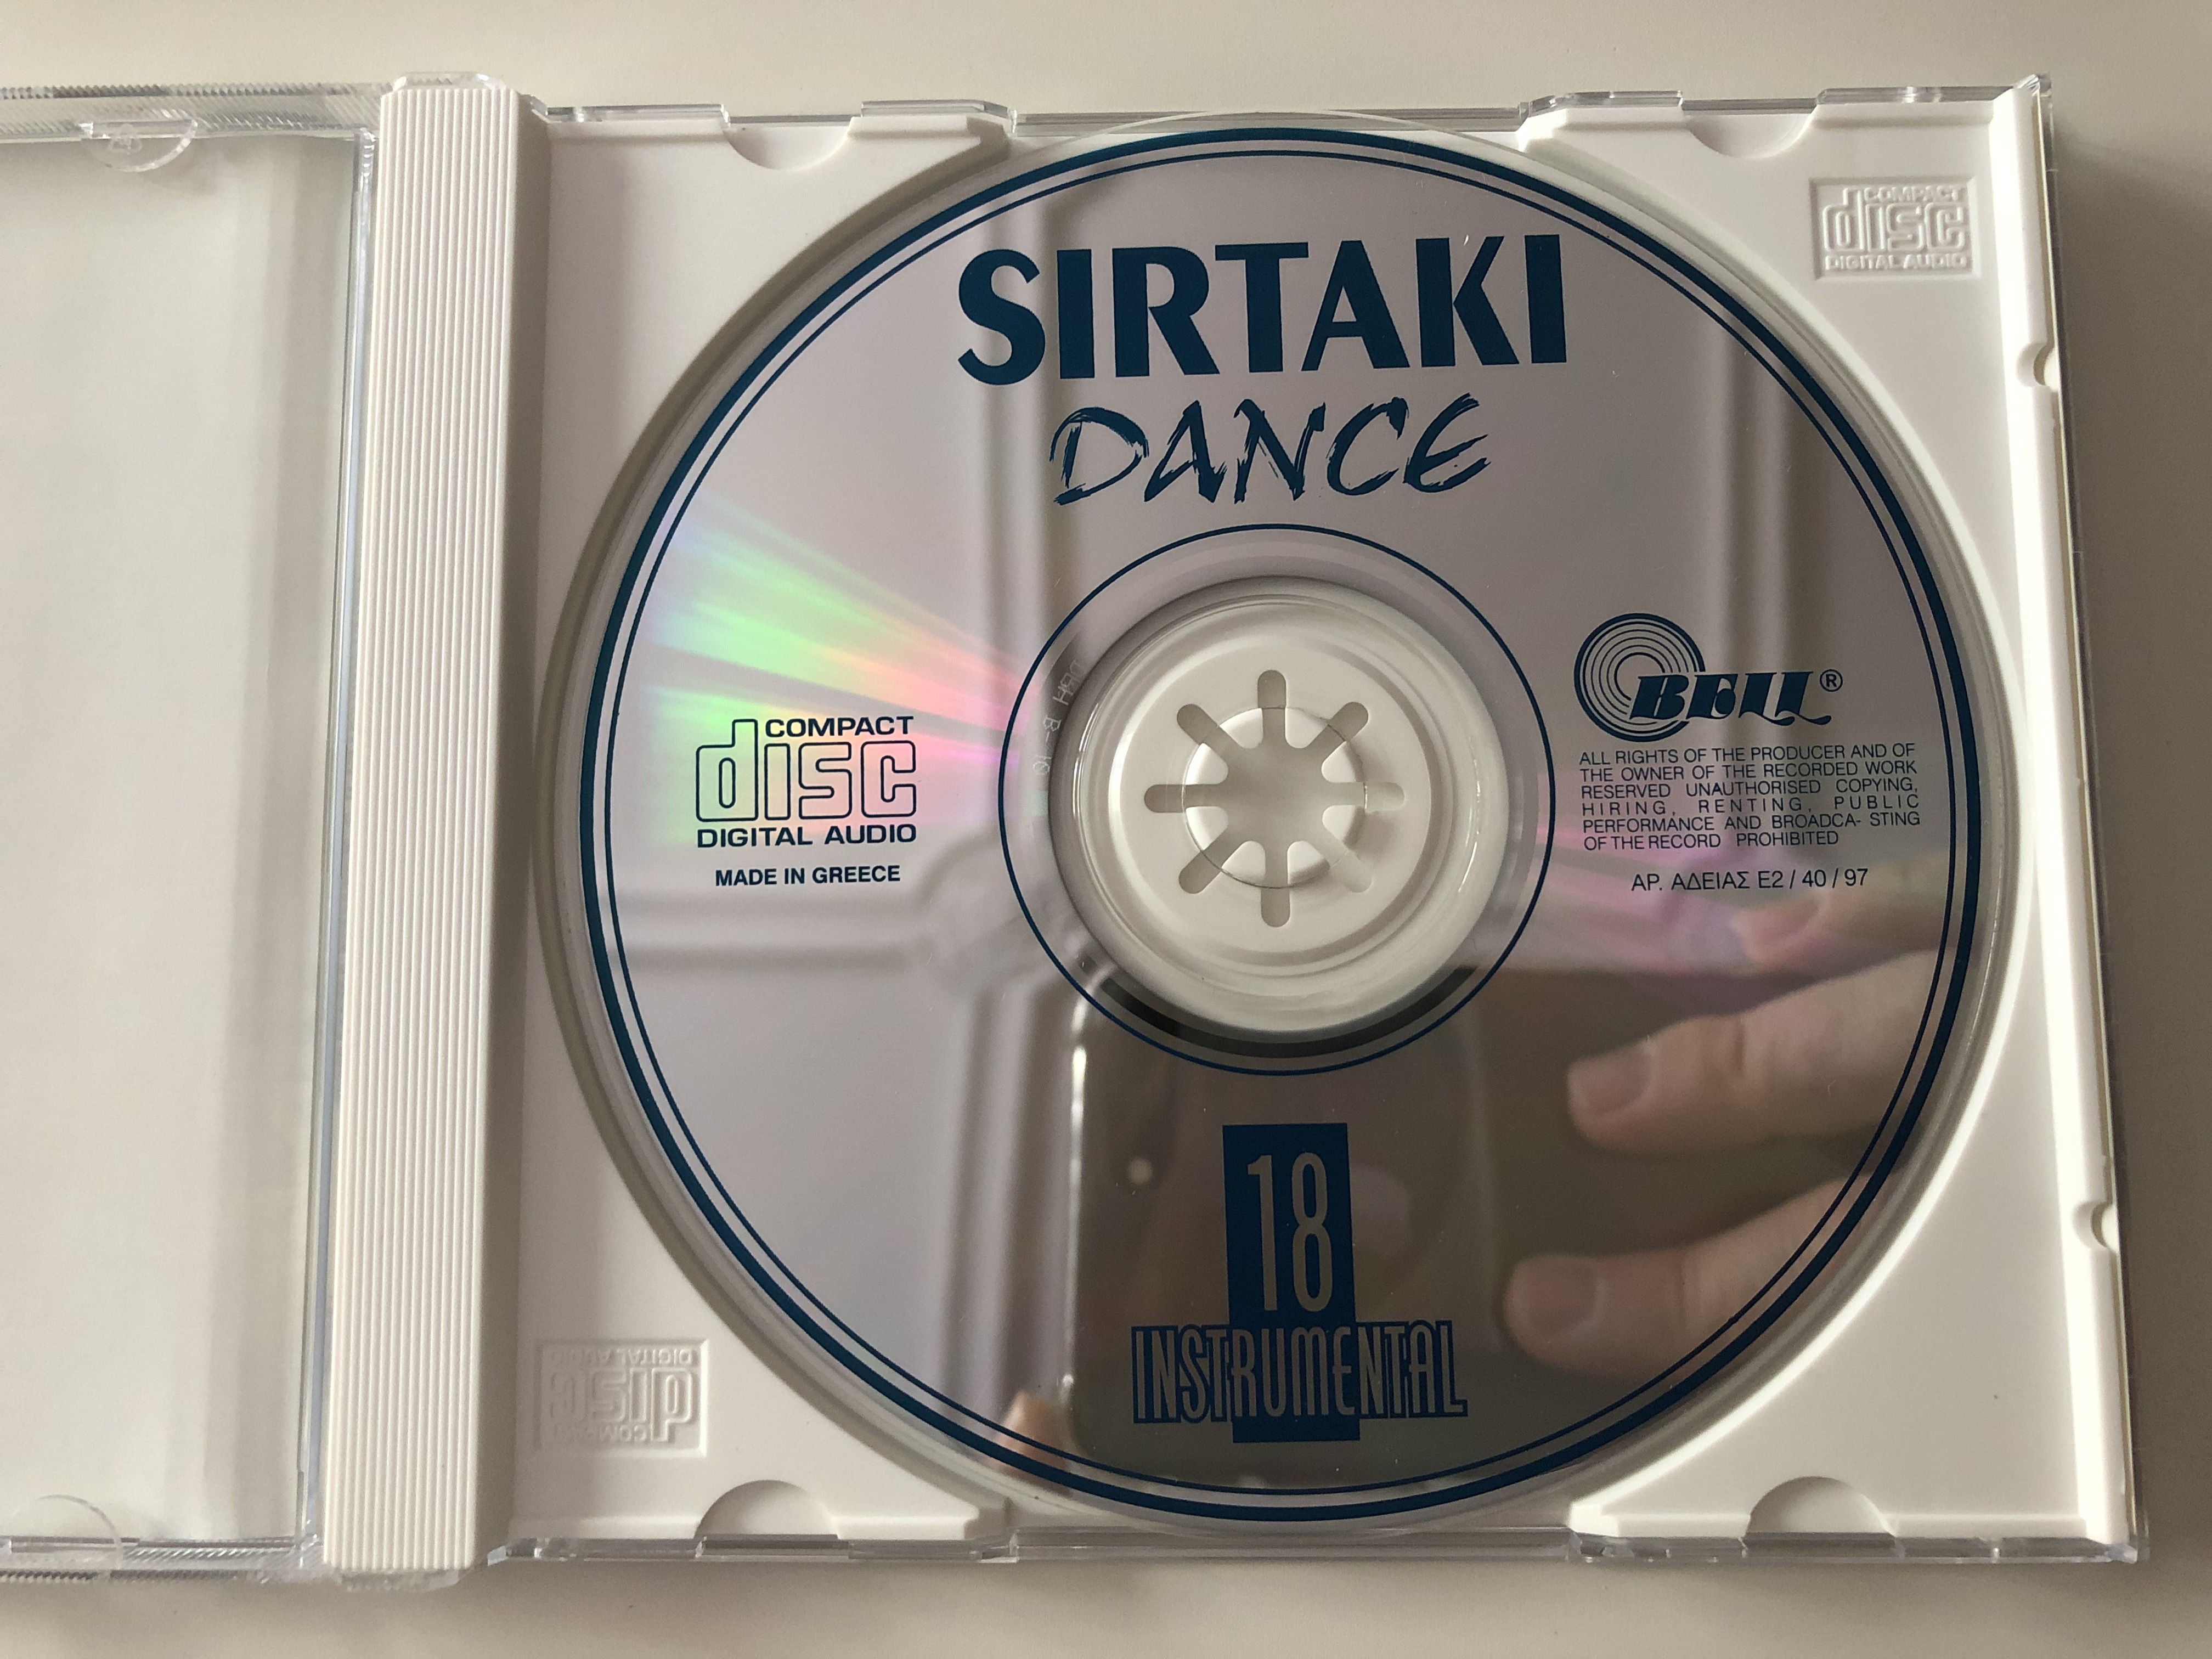 sirtaki-dance-18-instrumental-bell-audio-cd-ap.-a-24097-2-.jpg